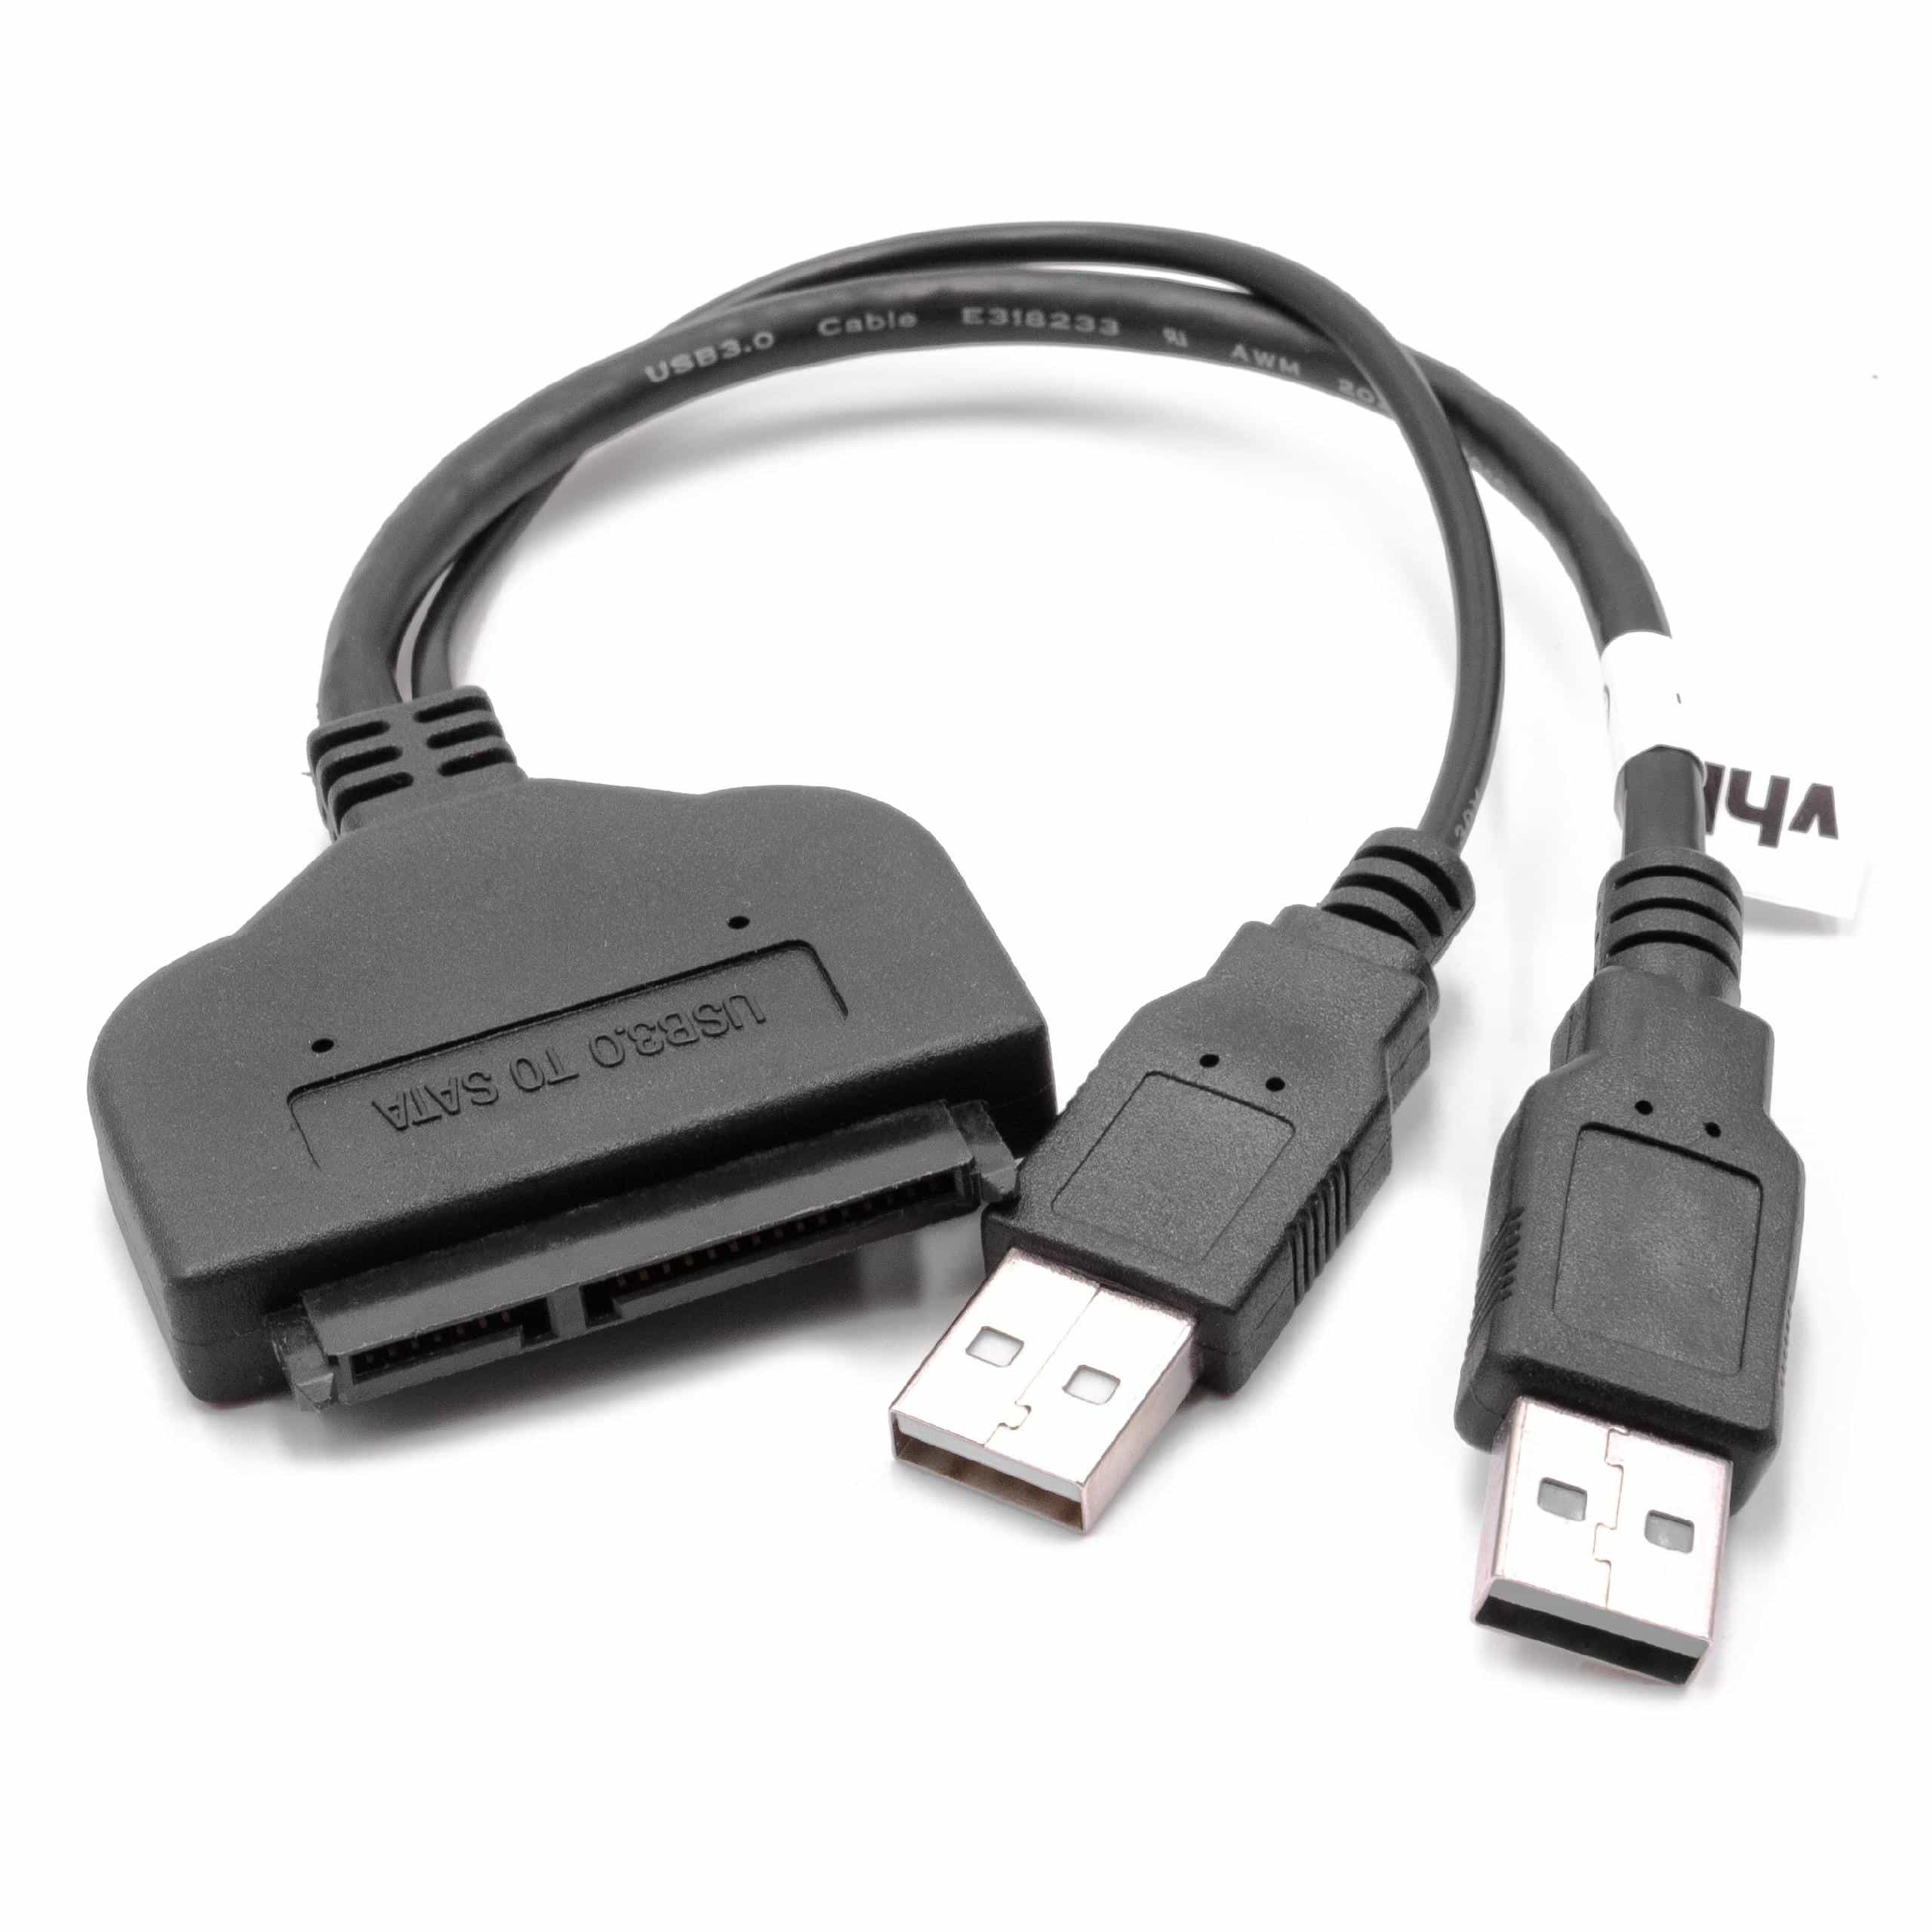 SATA III vers USB 3.0 Câble de raccordement pour disque dur HDD, SSD Plug & Play noir